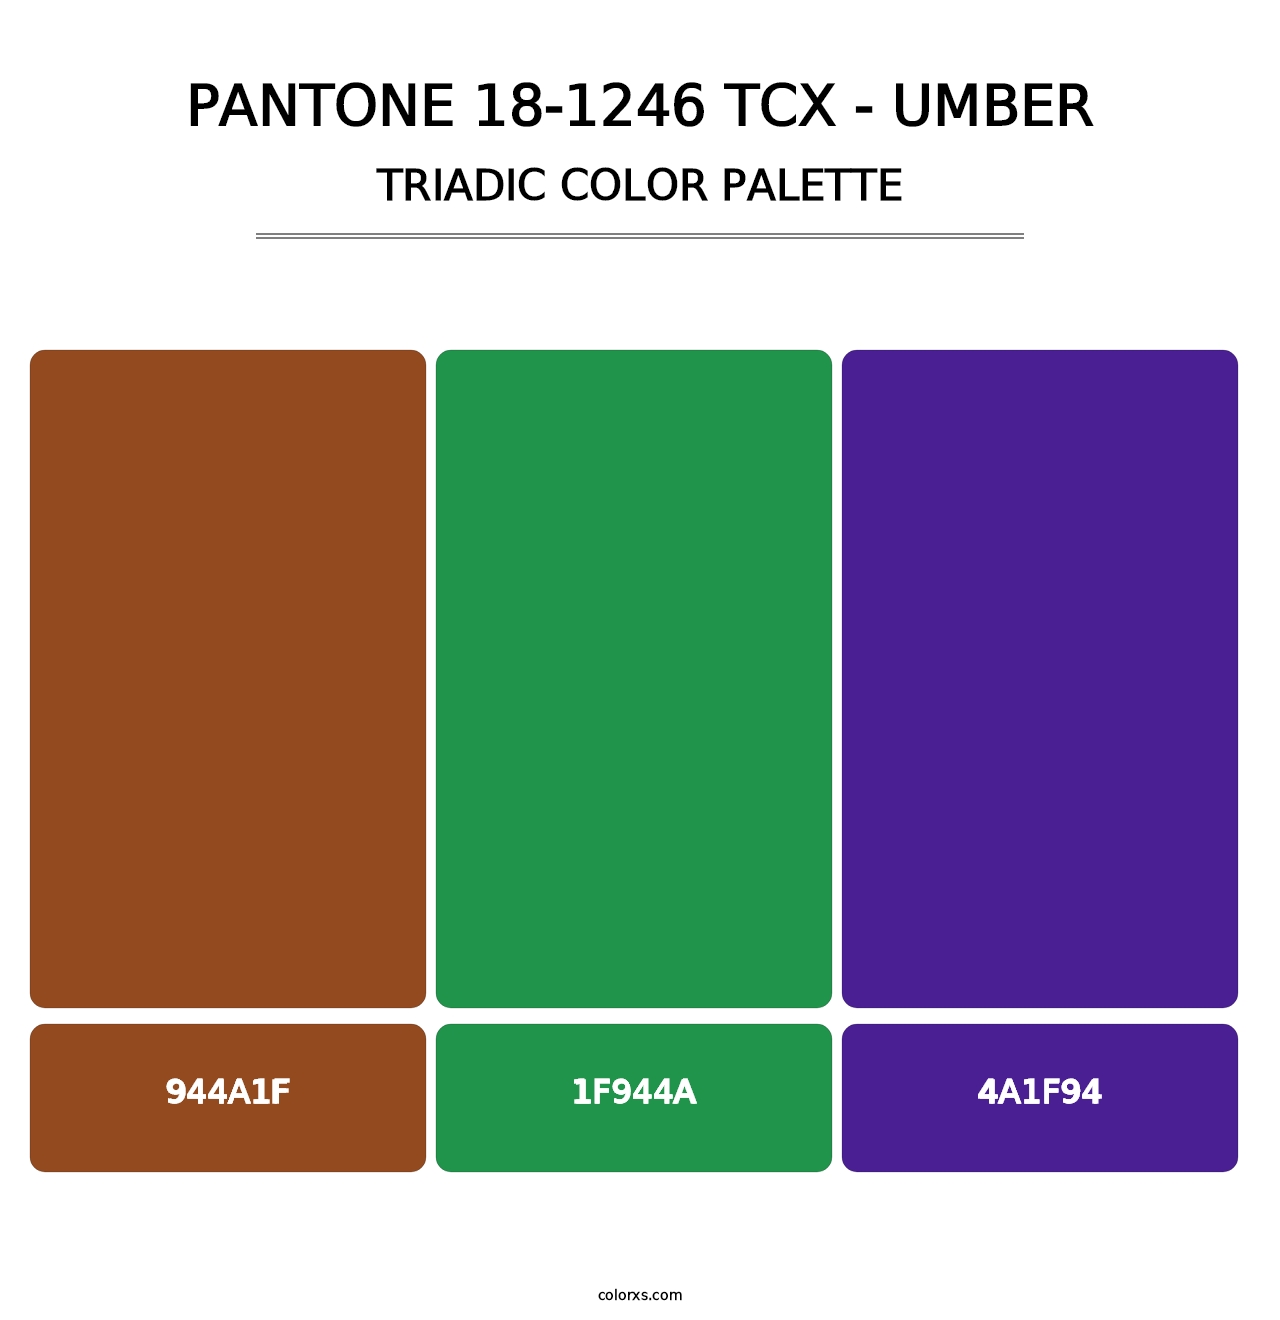 PANTONE 18-1246 TCX - Umber - Triadic Color Palette